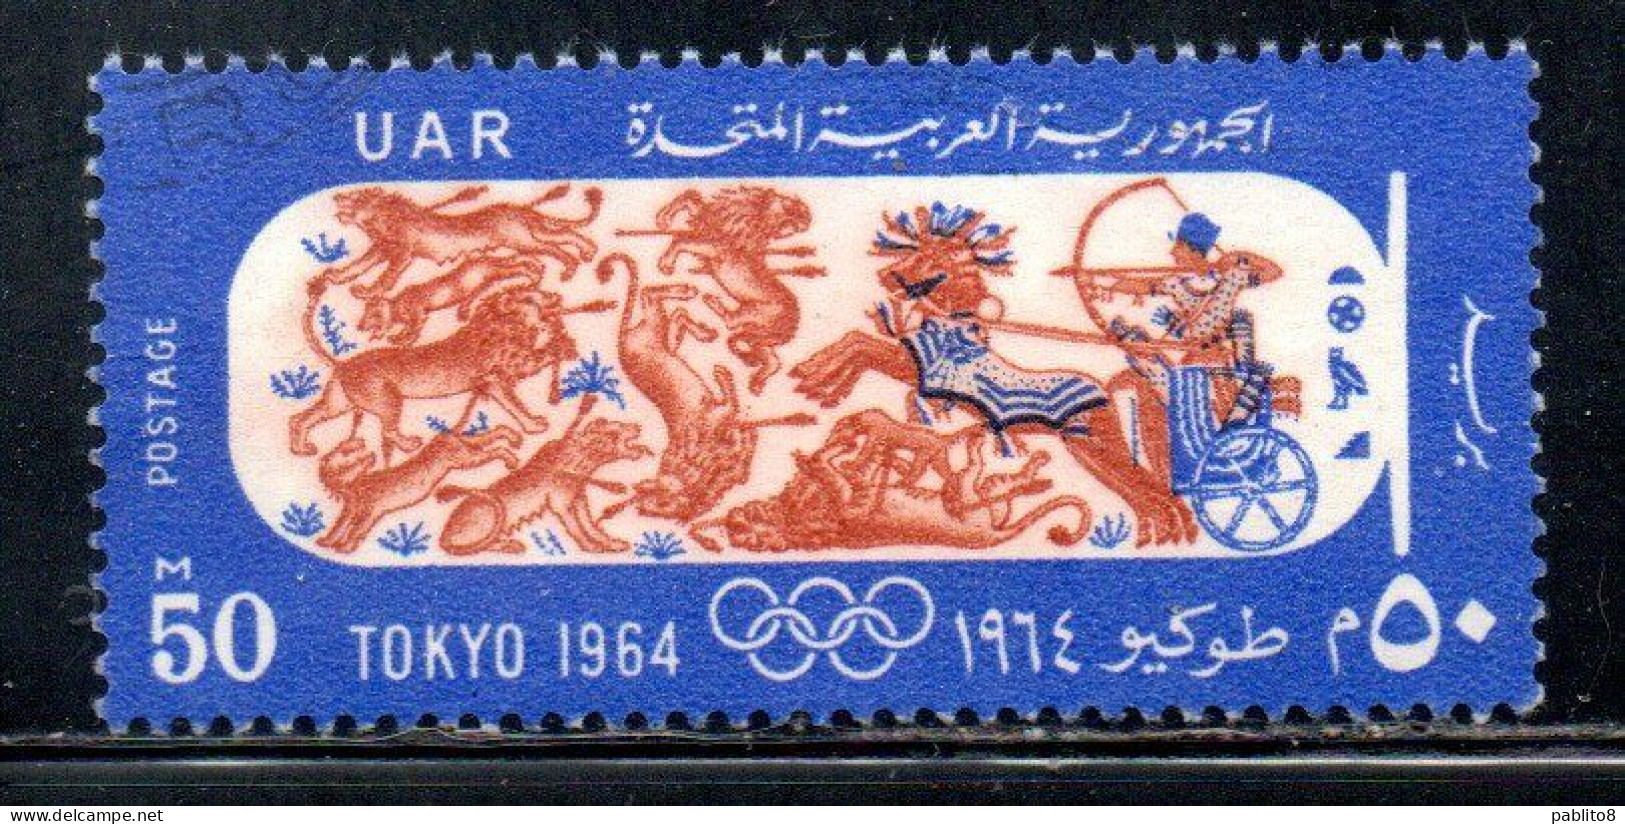 UAR EGYPT EGITTO 1964 OLYMIC GAMES TOKYO PHARAOH IN CHARIOT HUNTING 50m MH - Nuovi